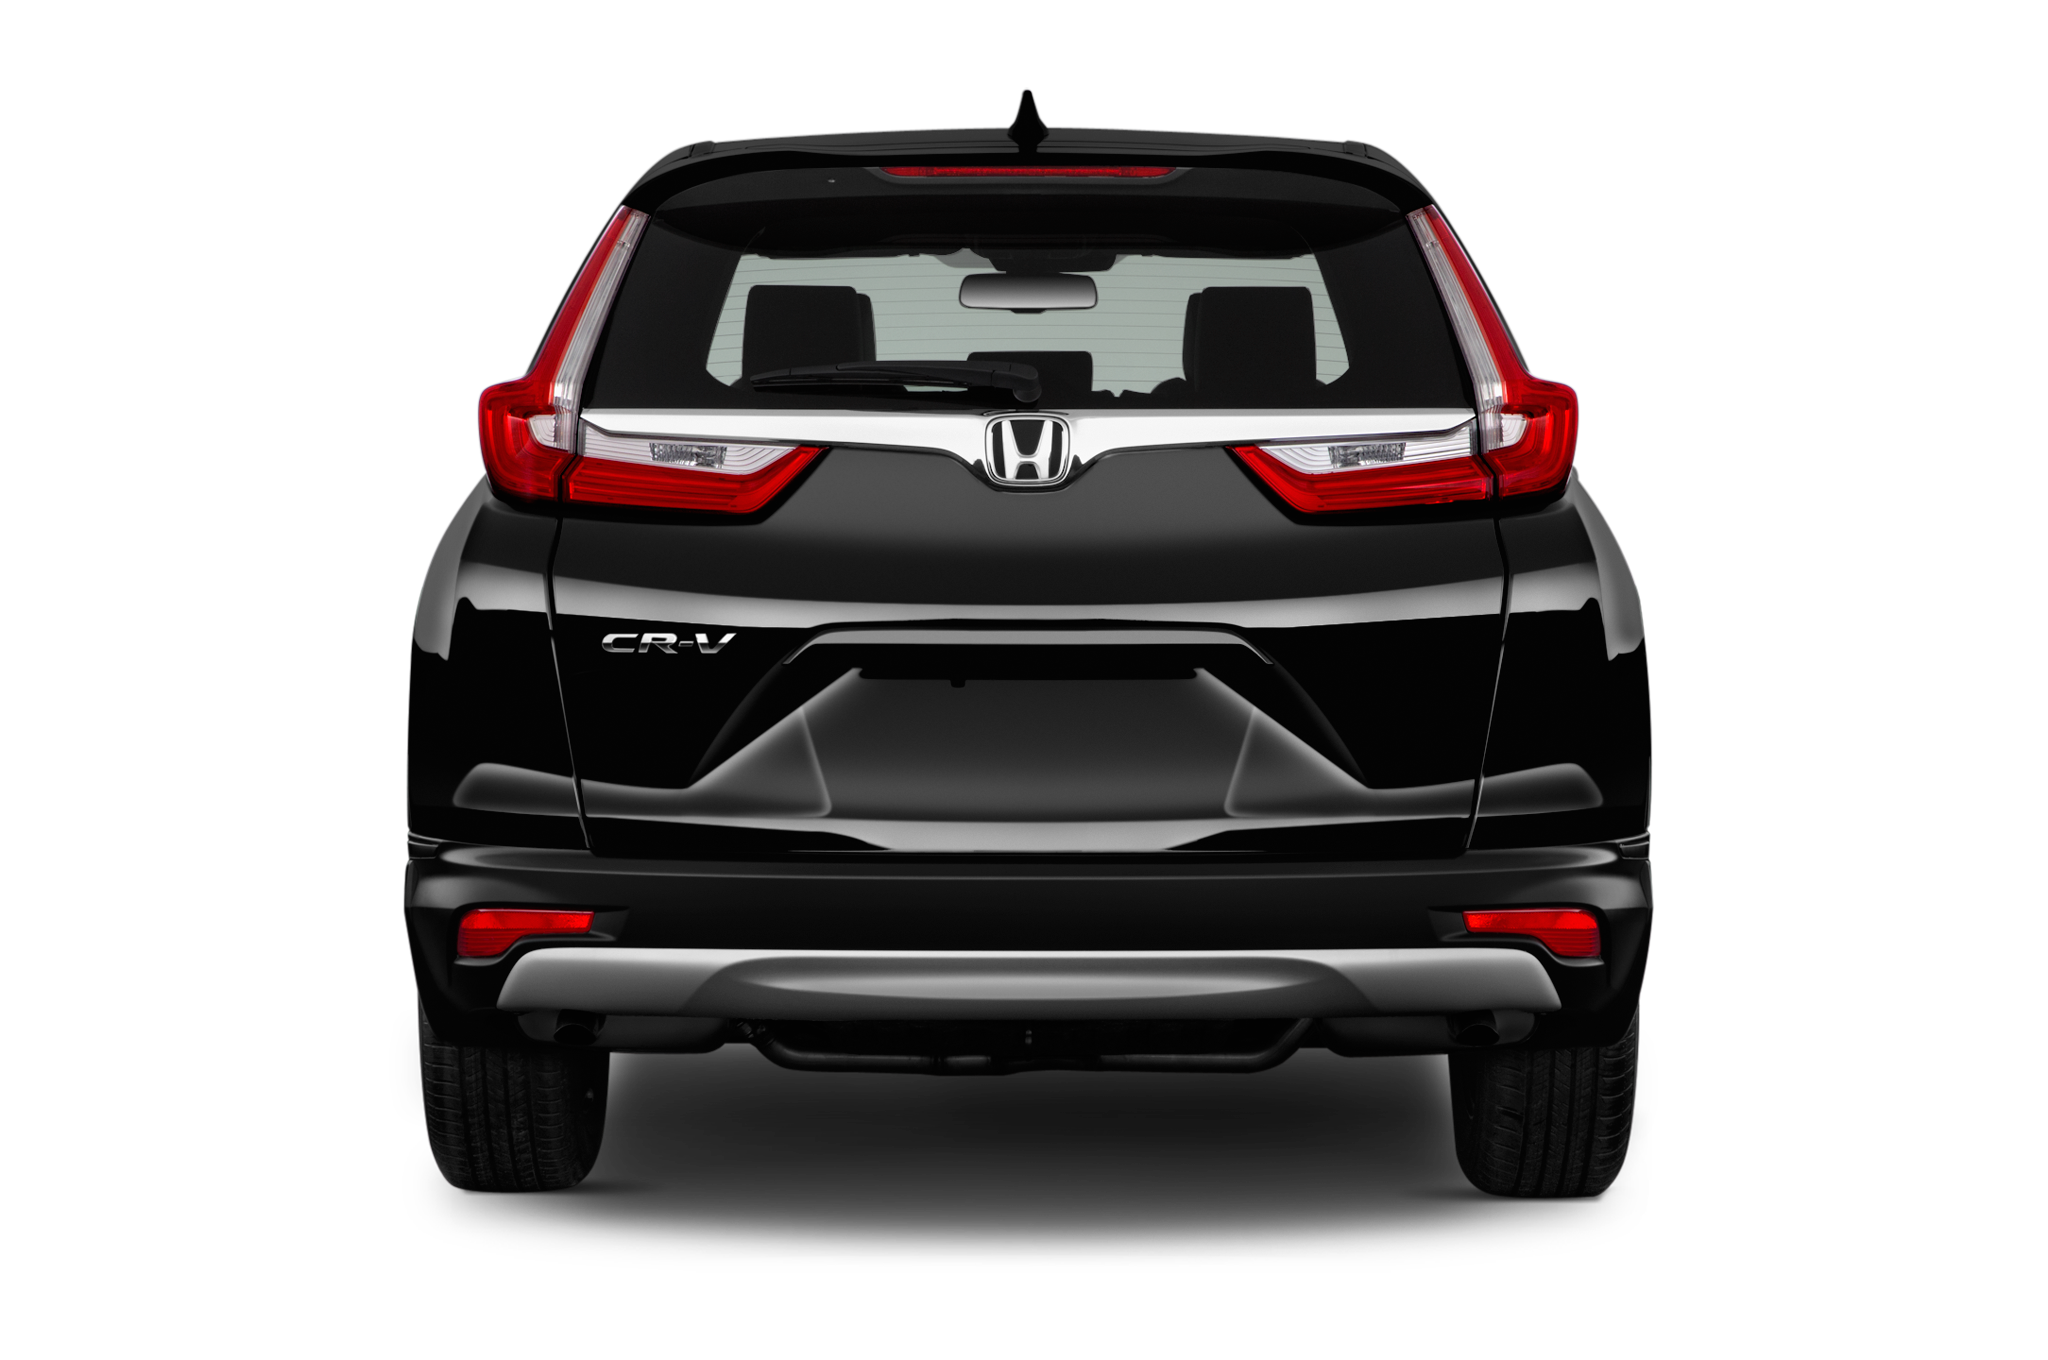 Honda cr-v incentives